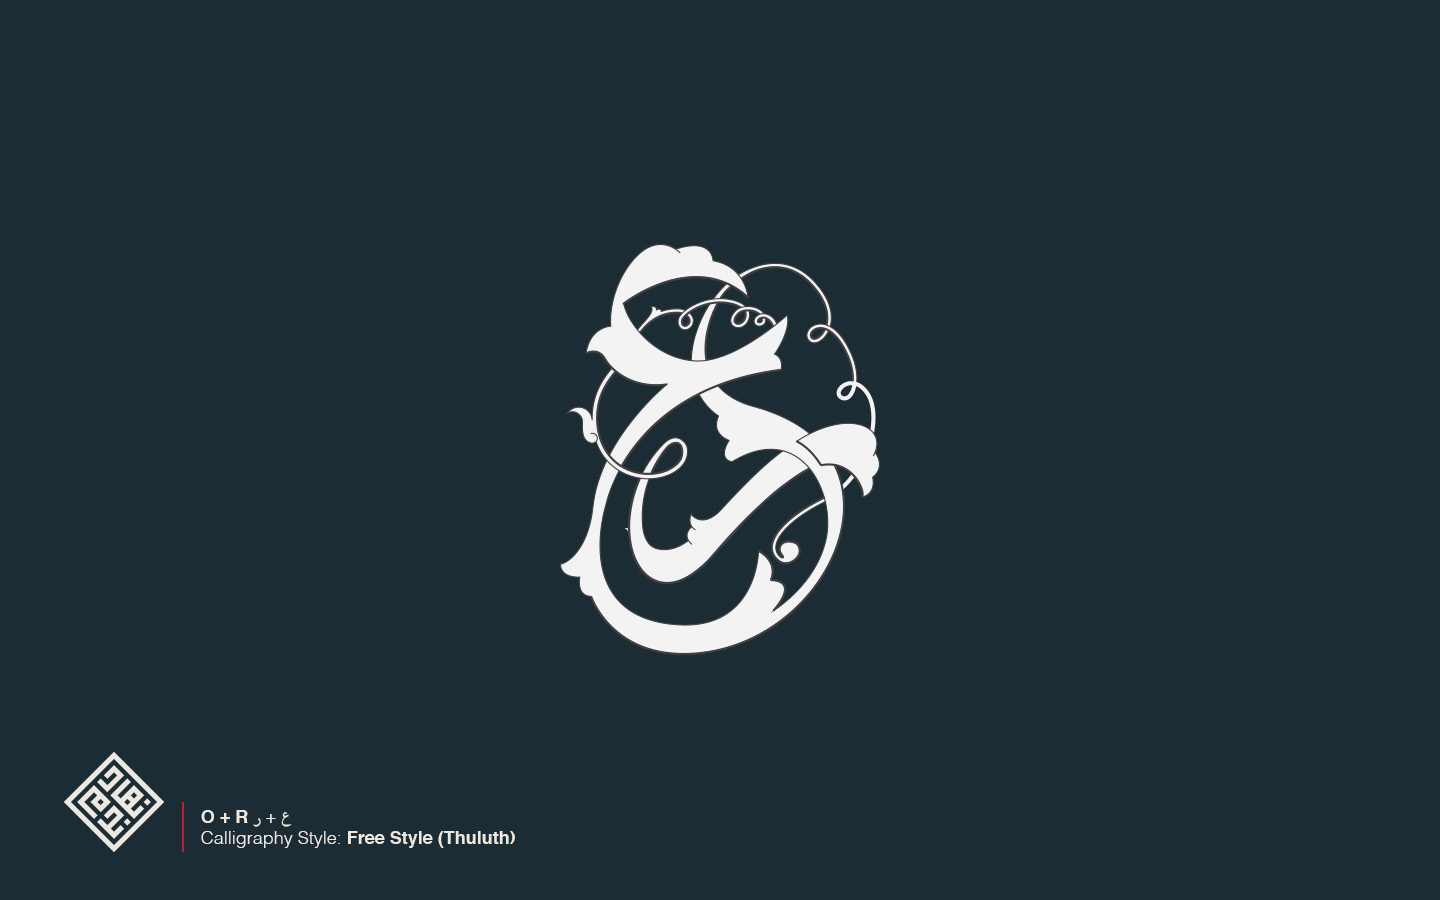 O & R Arabic Calligraphy Logo designed by Nihad Nadam